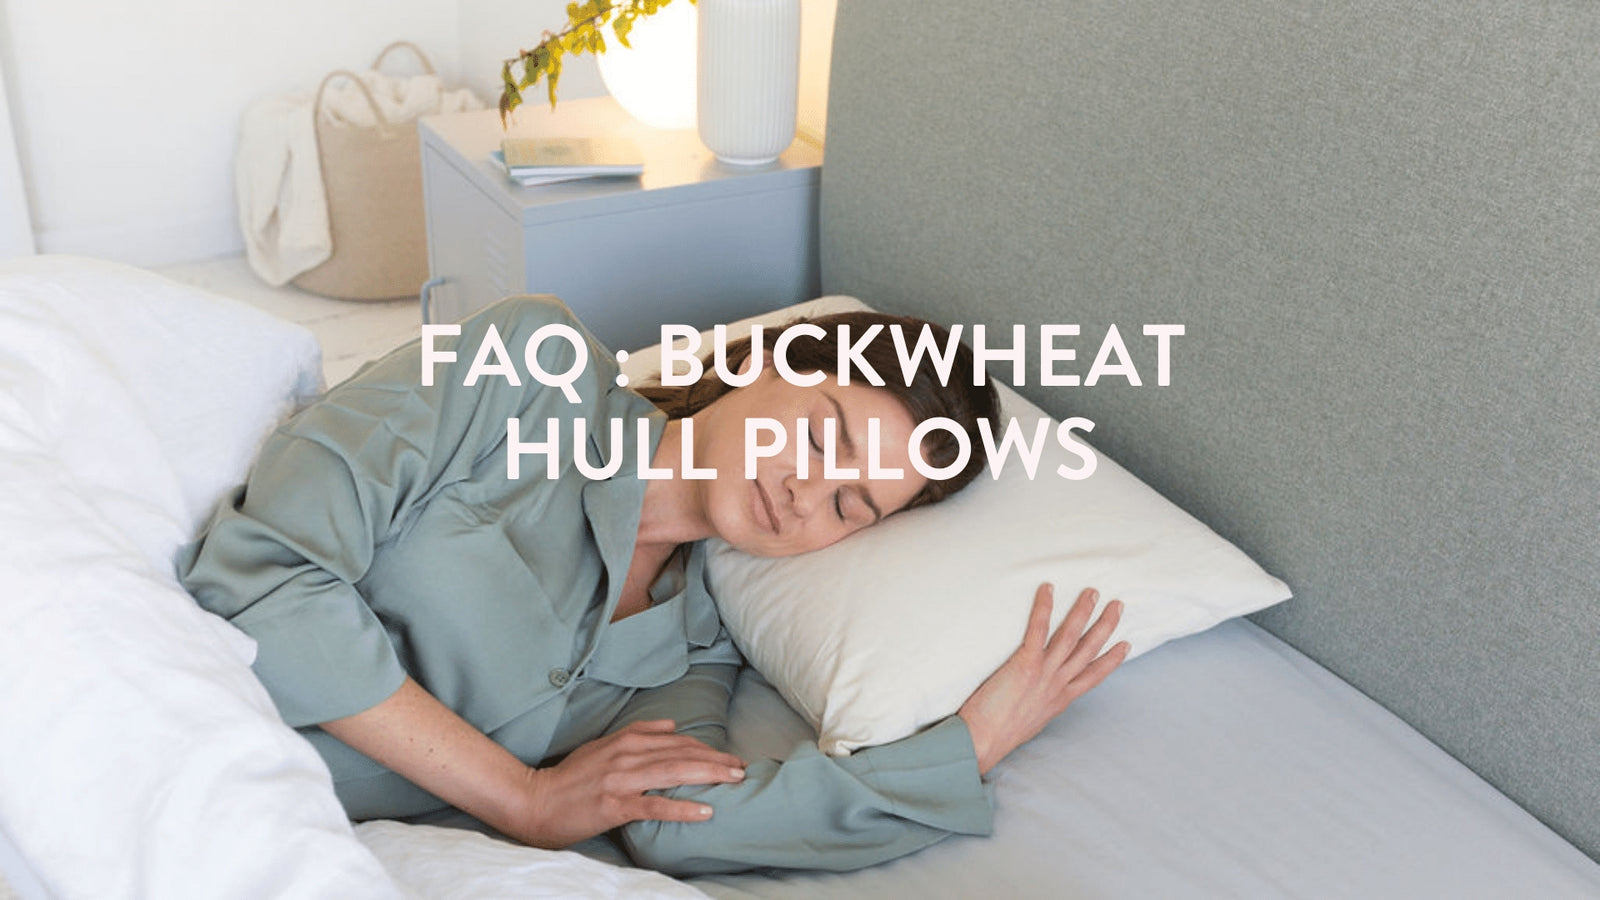 Buckwheat hull pillows organic feel size best natural vegan